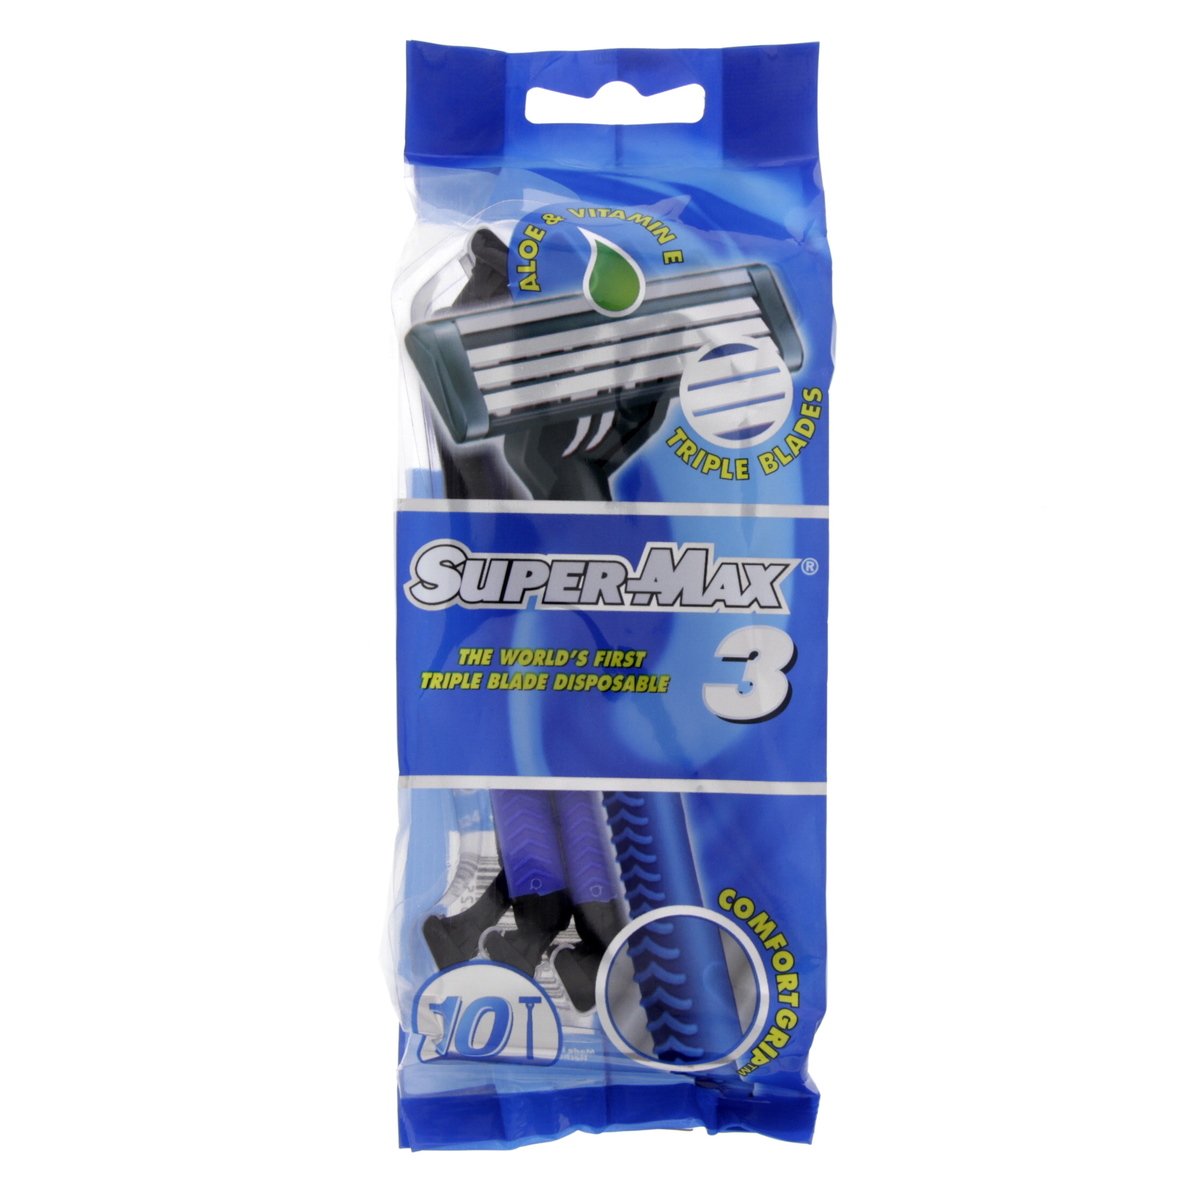 Super Max Triple Blade Disposable Razor 10 pcs